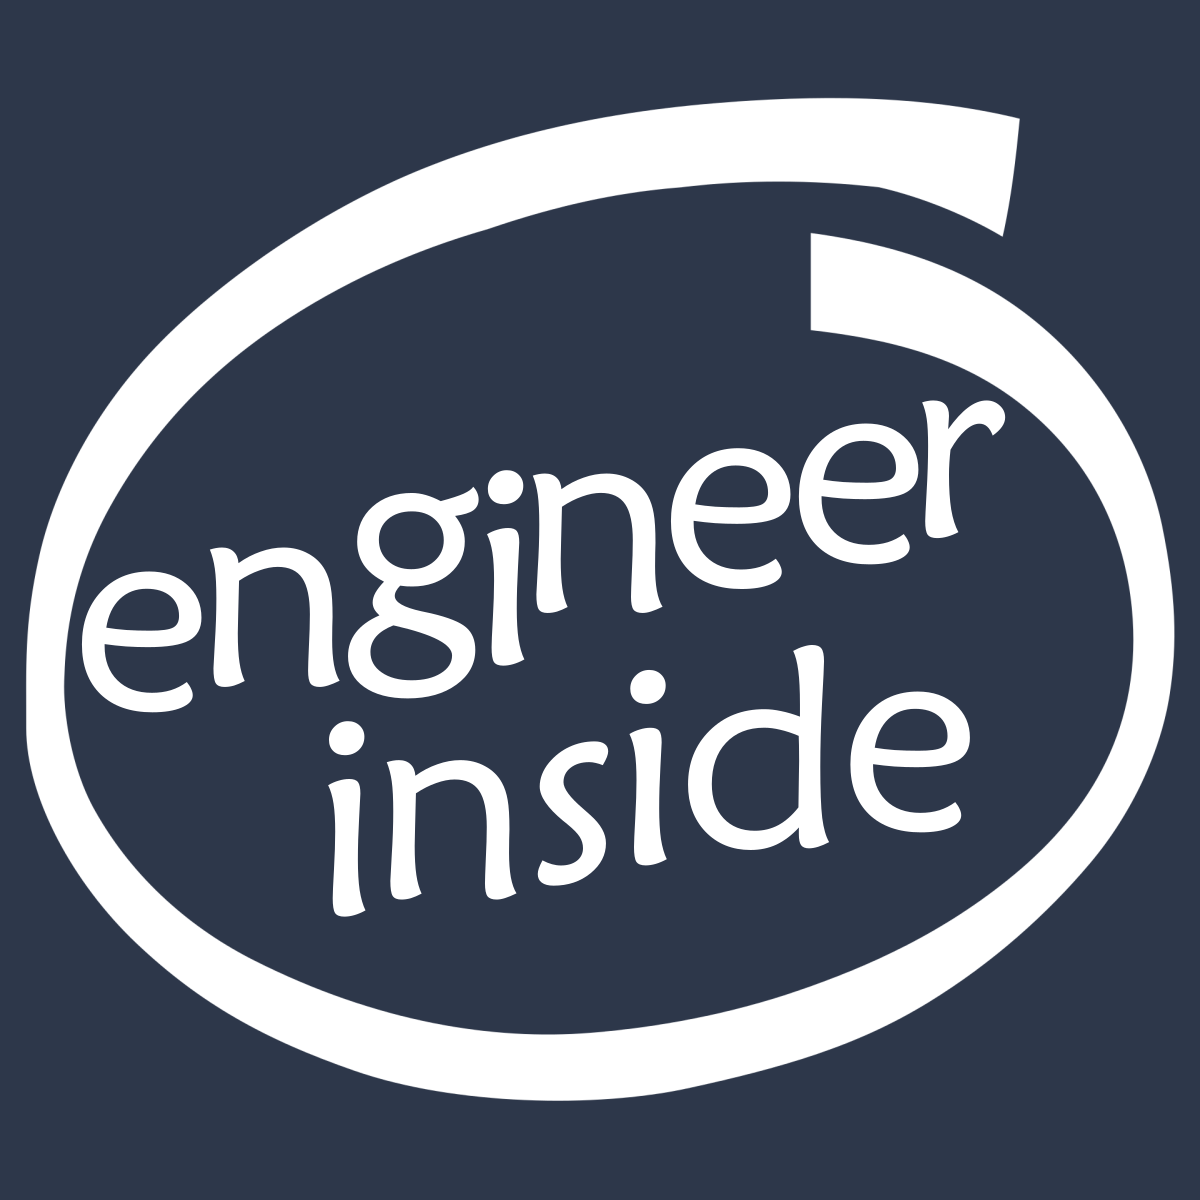 Engineer Inside - Engineering Outfitters